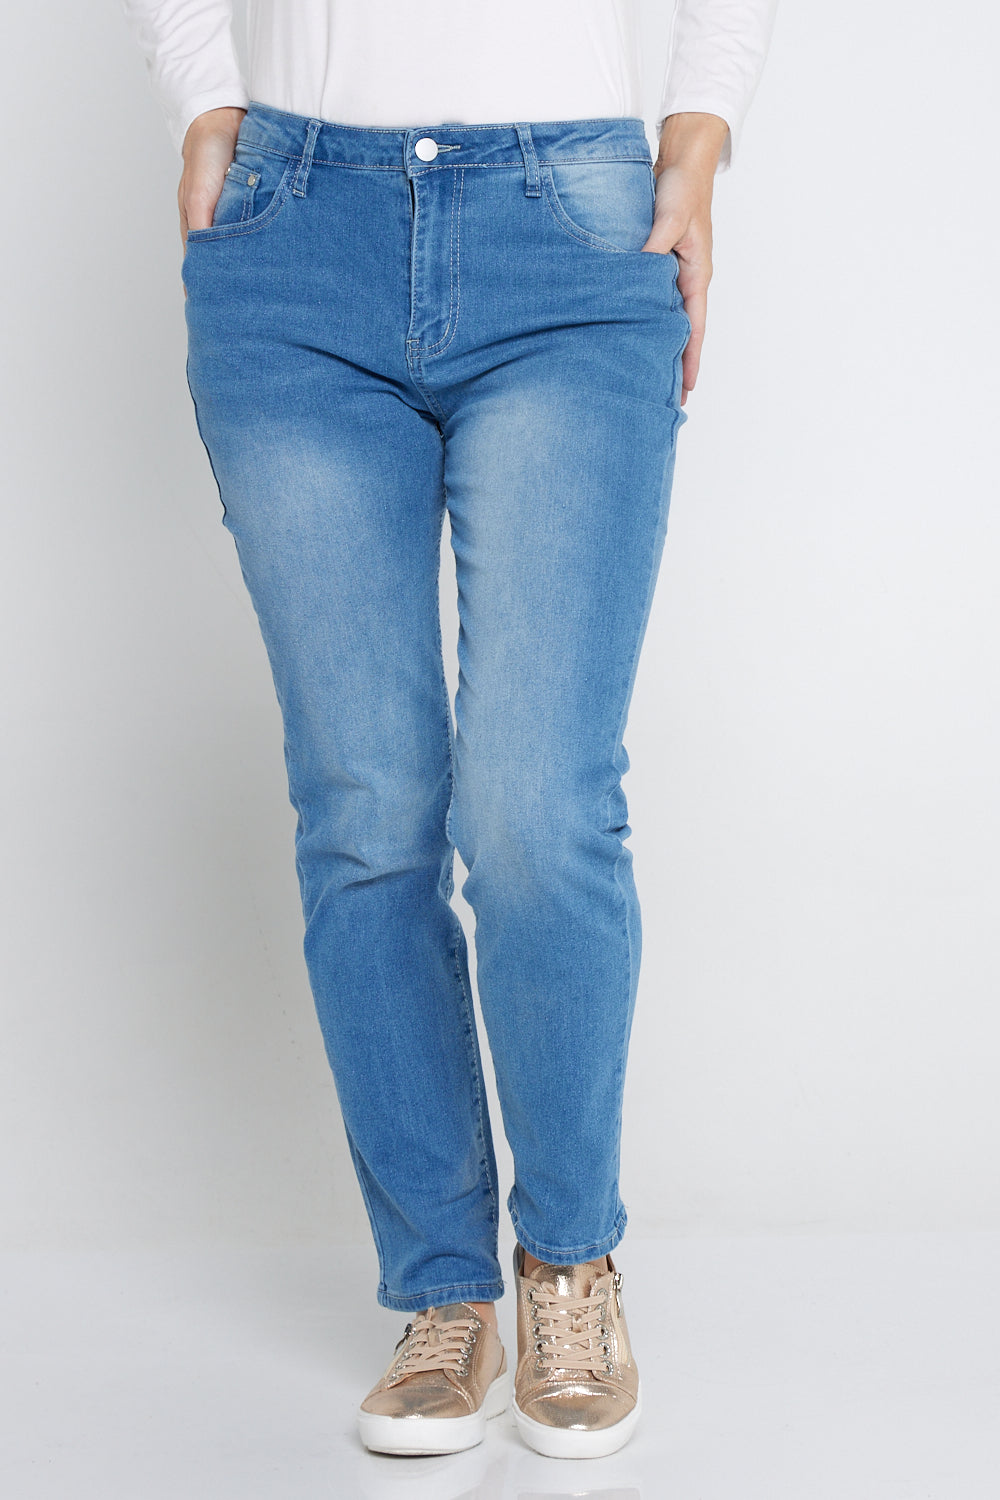 Savannah Cotton Jeans - Mid Denim